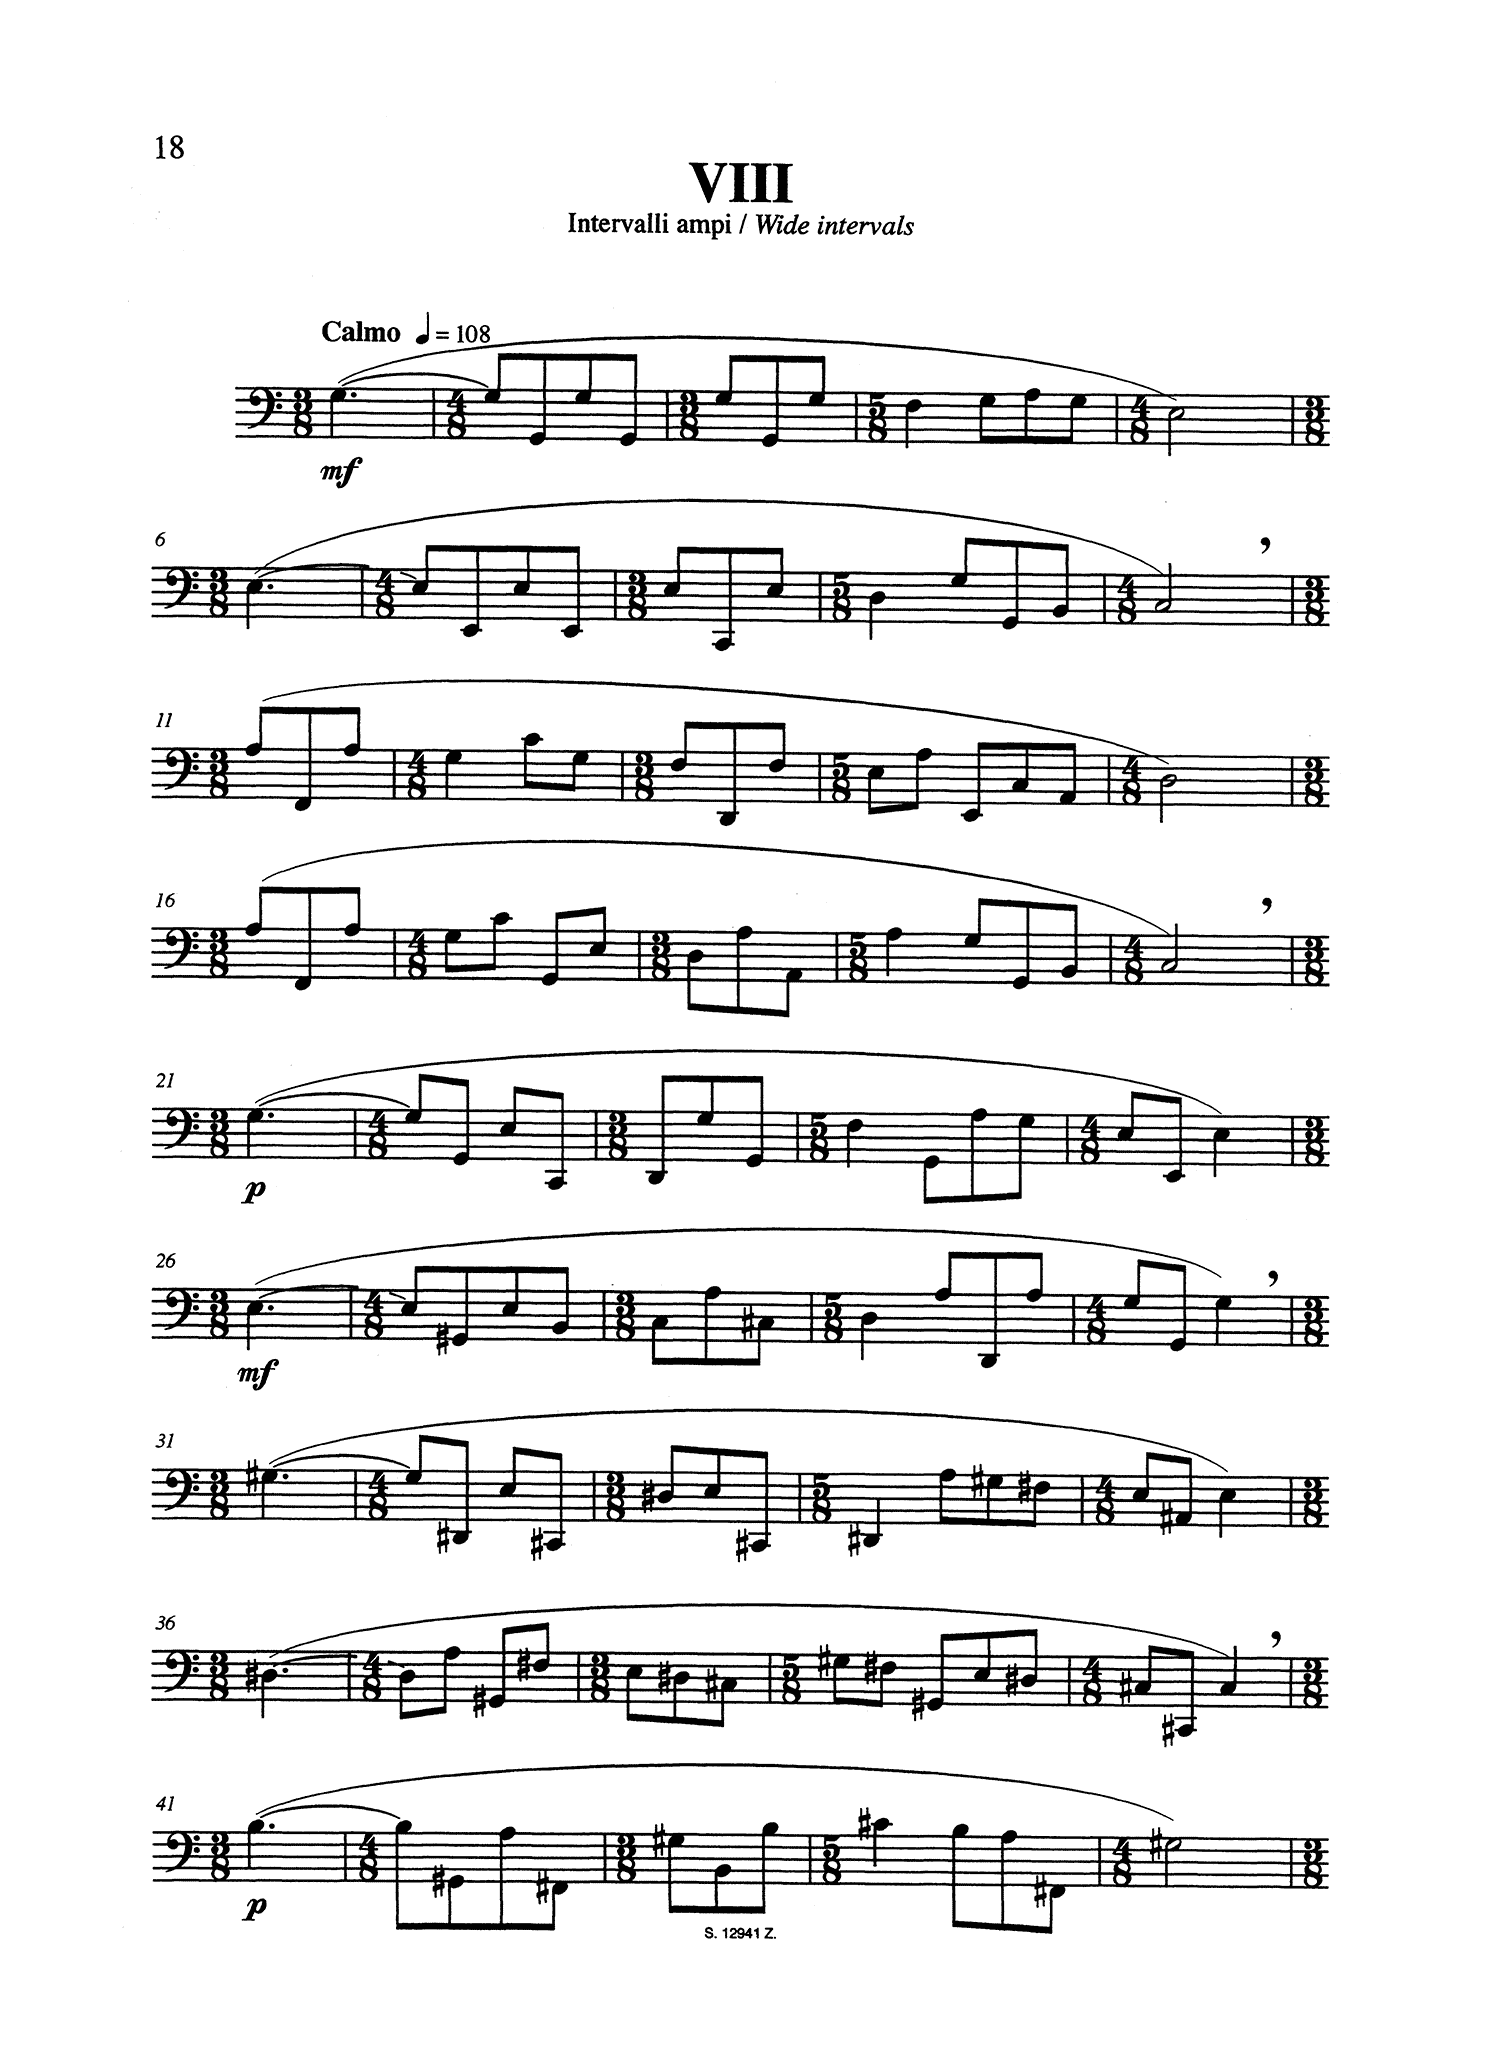 Sauro Berti Venti Studi bass clarinet basset horn no. 8